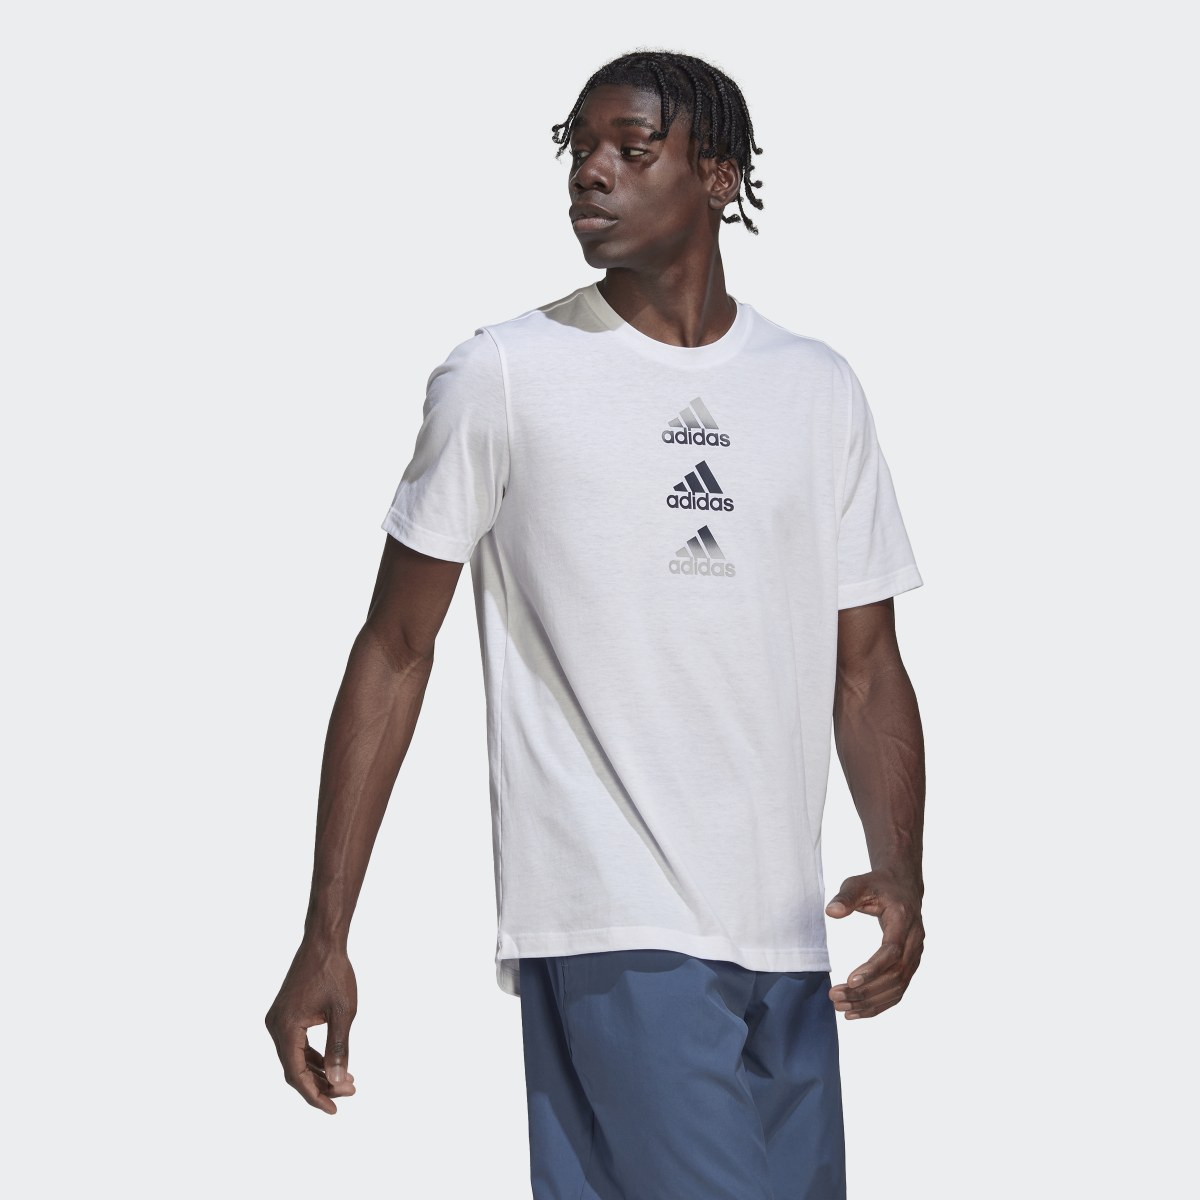 Adidas T-shirt Designed to Move. 4